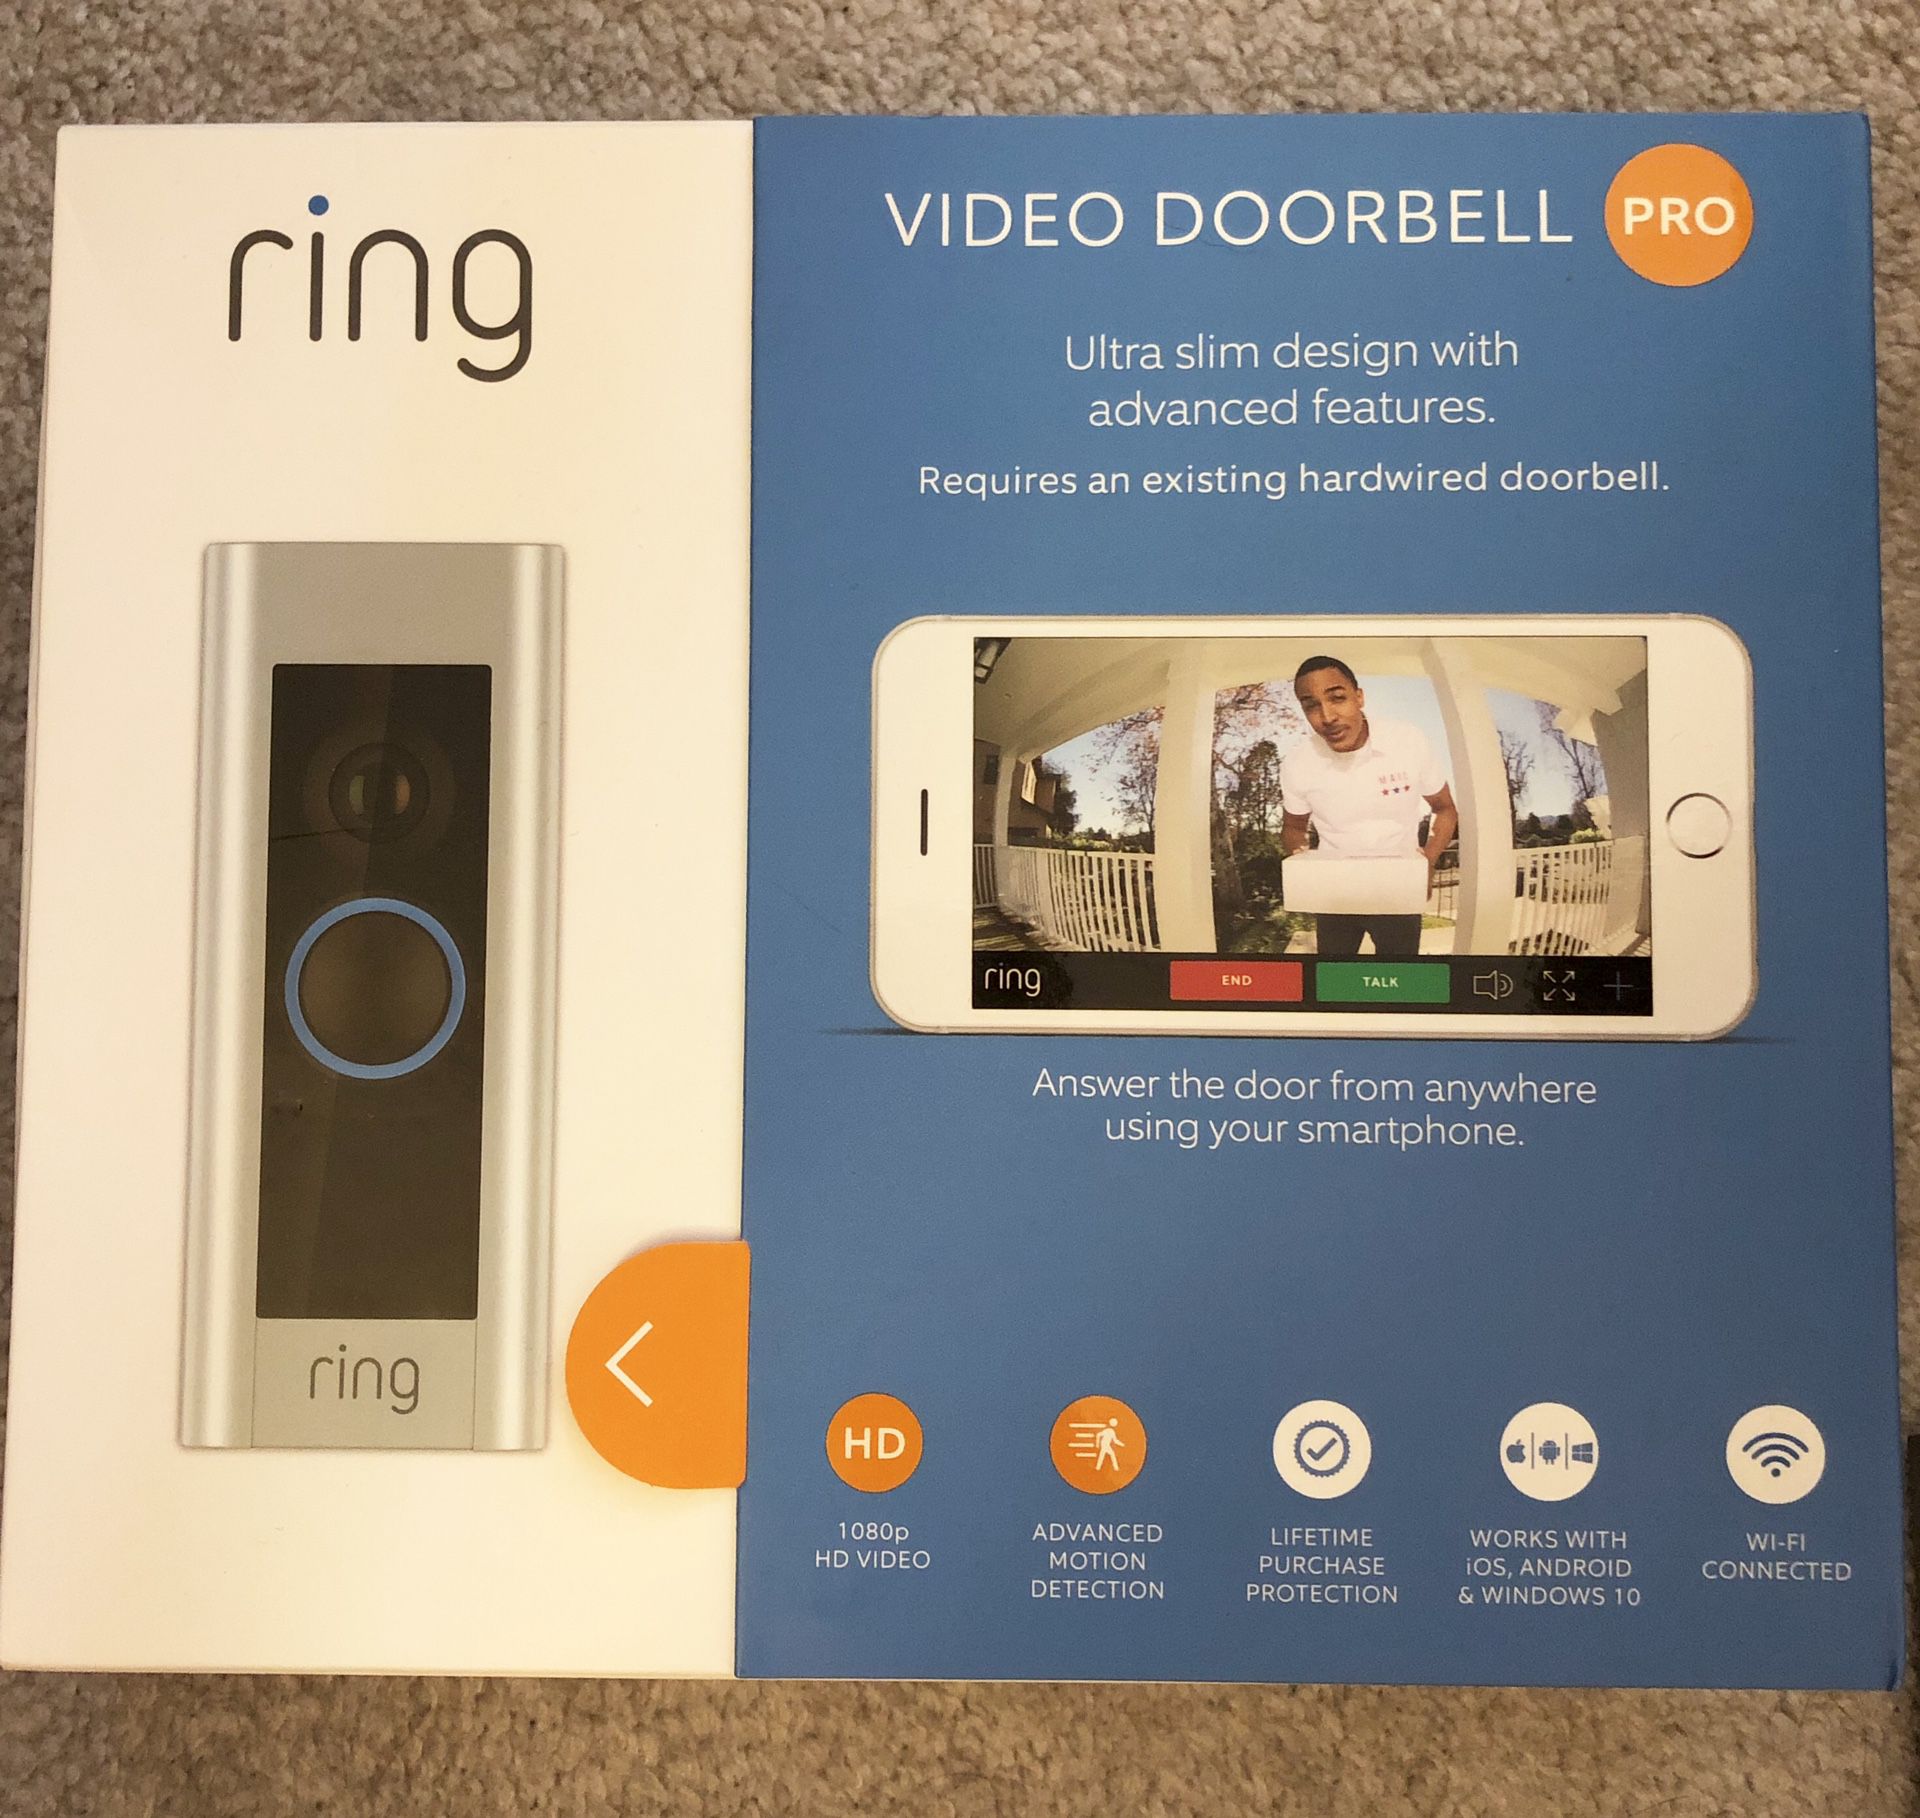 Brand new Ring video doorbell Pro